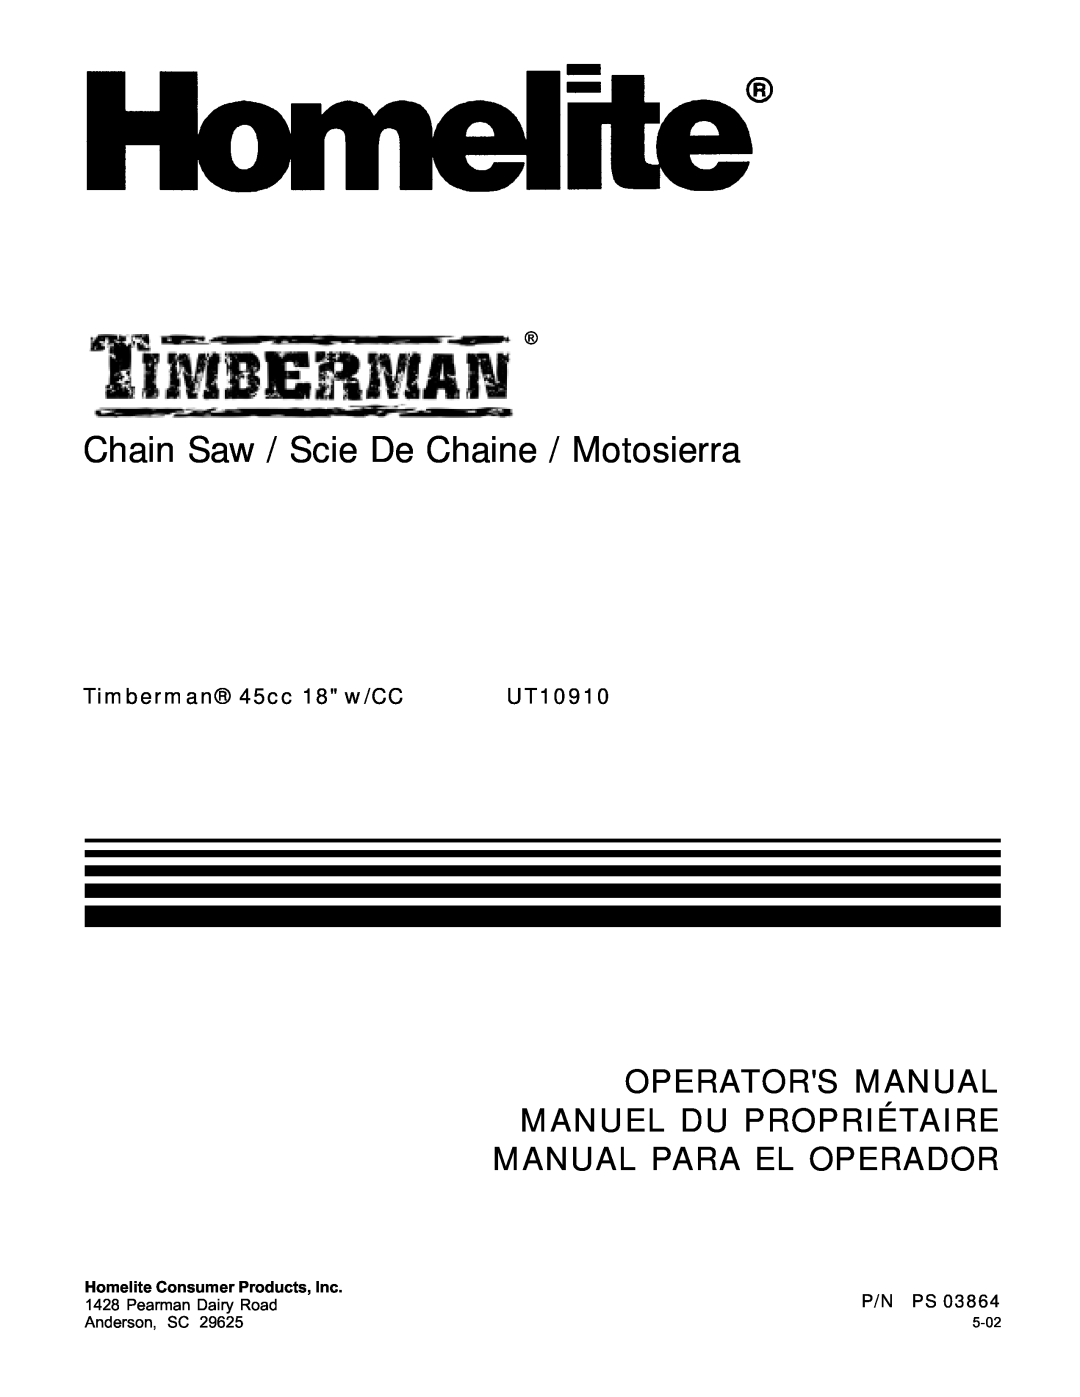 Homelite ut 10910 manual P/N Ps, Chain Saw / Scie De Chaine / Motosierra, Timberman 45cc 18 w/CC, UT10910 